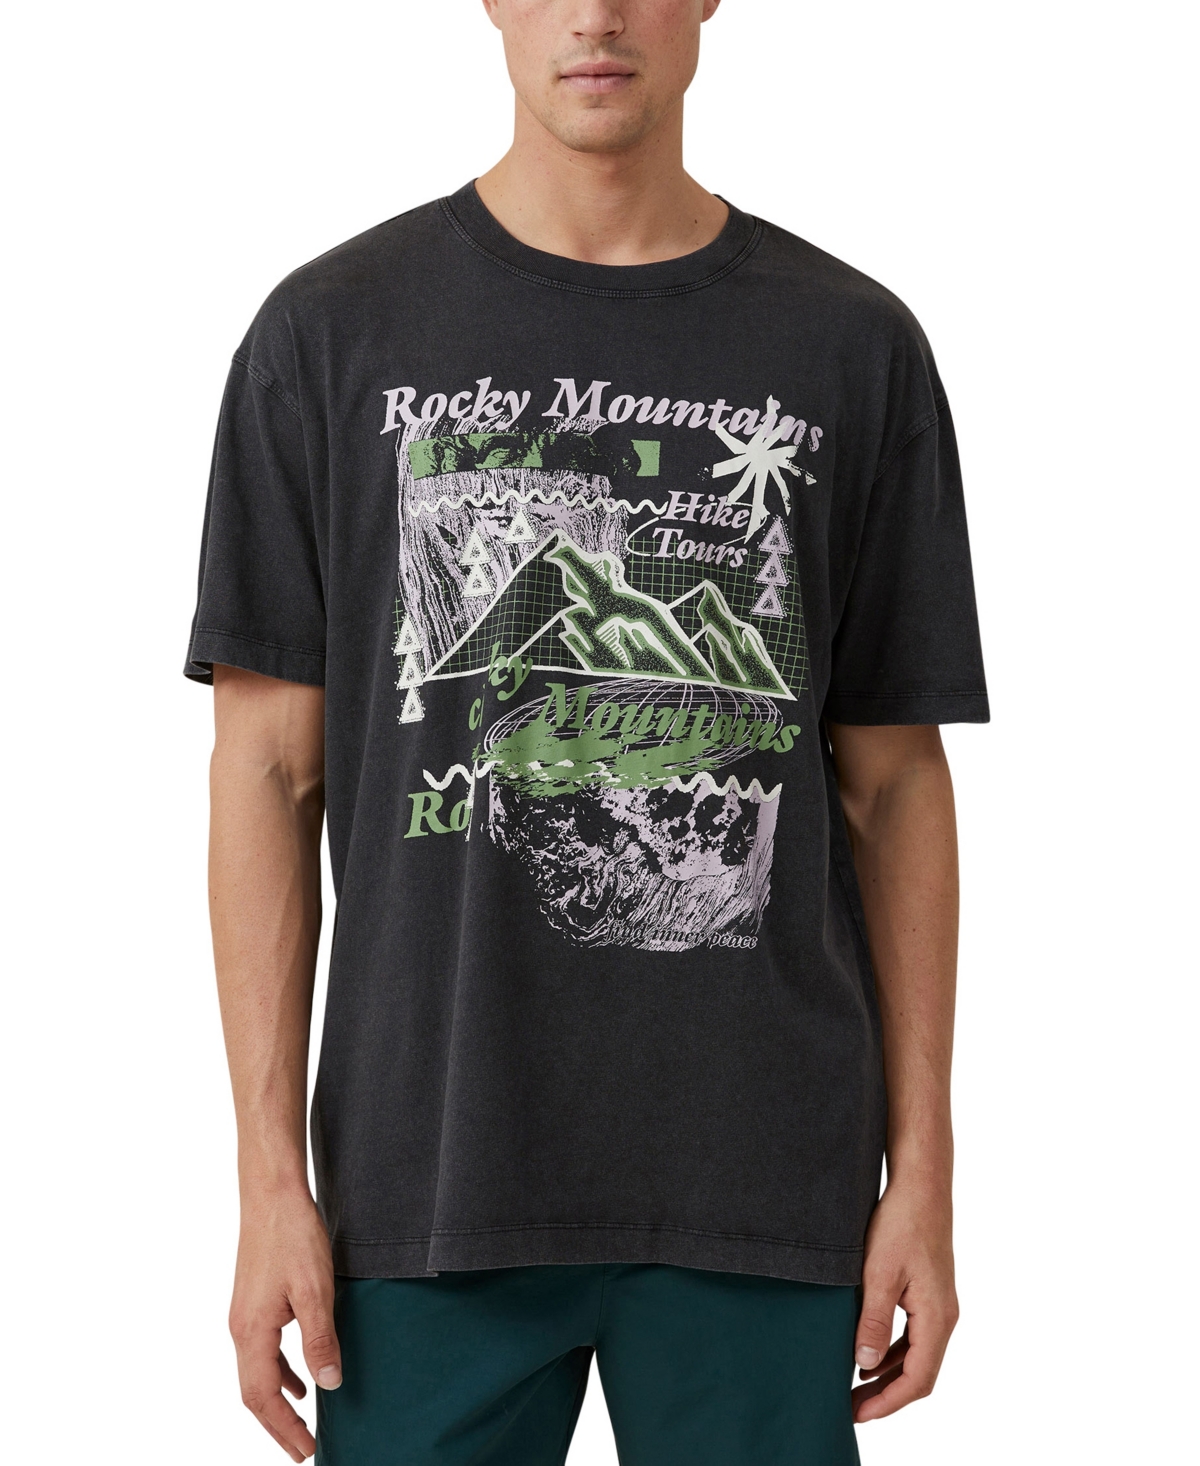 Cotton On Men's Premium Loose Fit Art T-shirt In Black,hike Tours